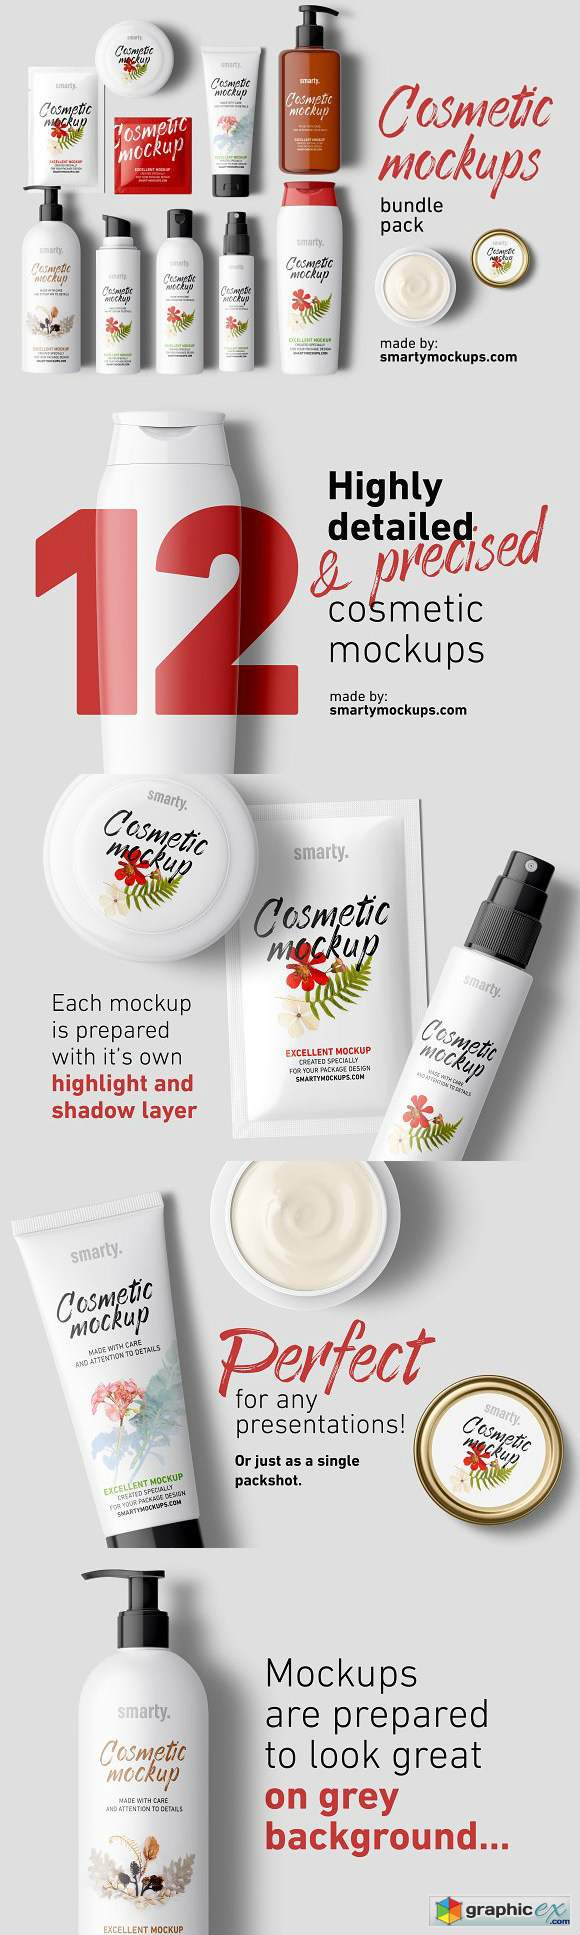 Cosmetic Mockups Bundle Pack